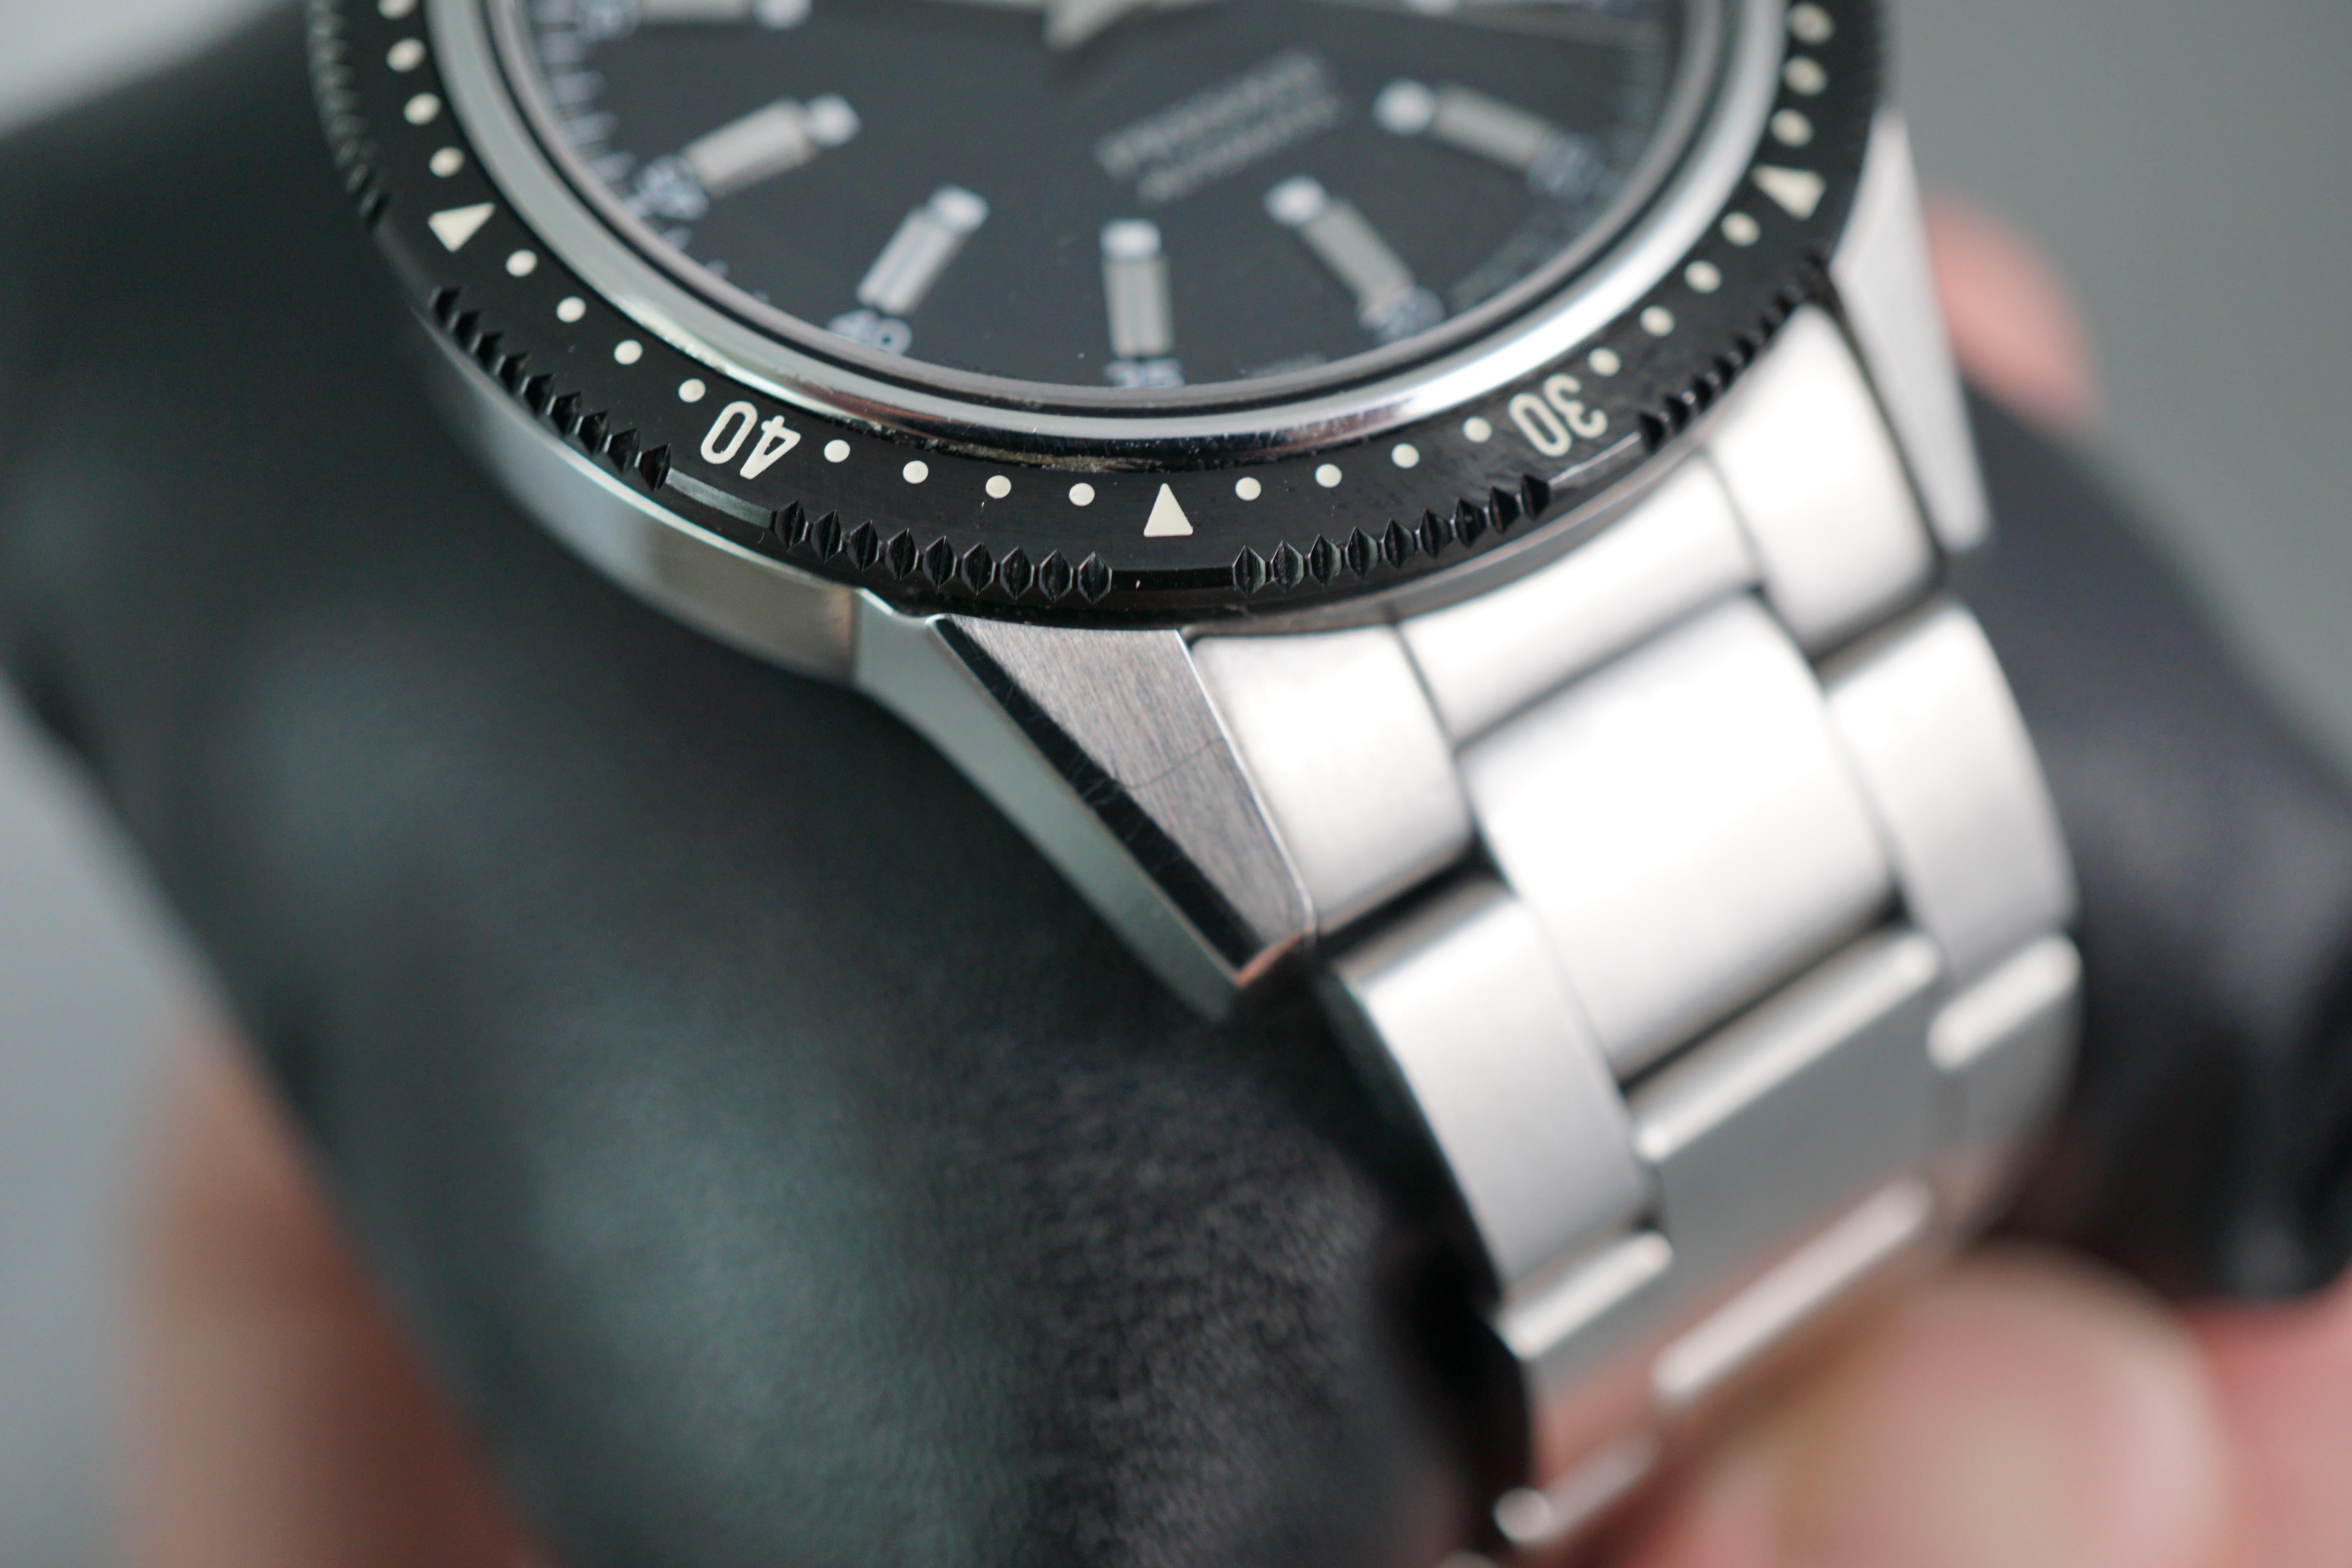 WTS] Seiko Presage SARX073 6R35 Limited Edition Black Dial Automatic  Bracelet - $430 | WatchCharts